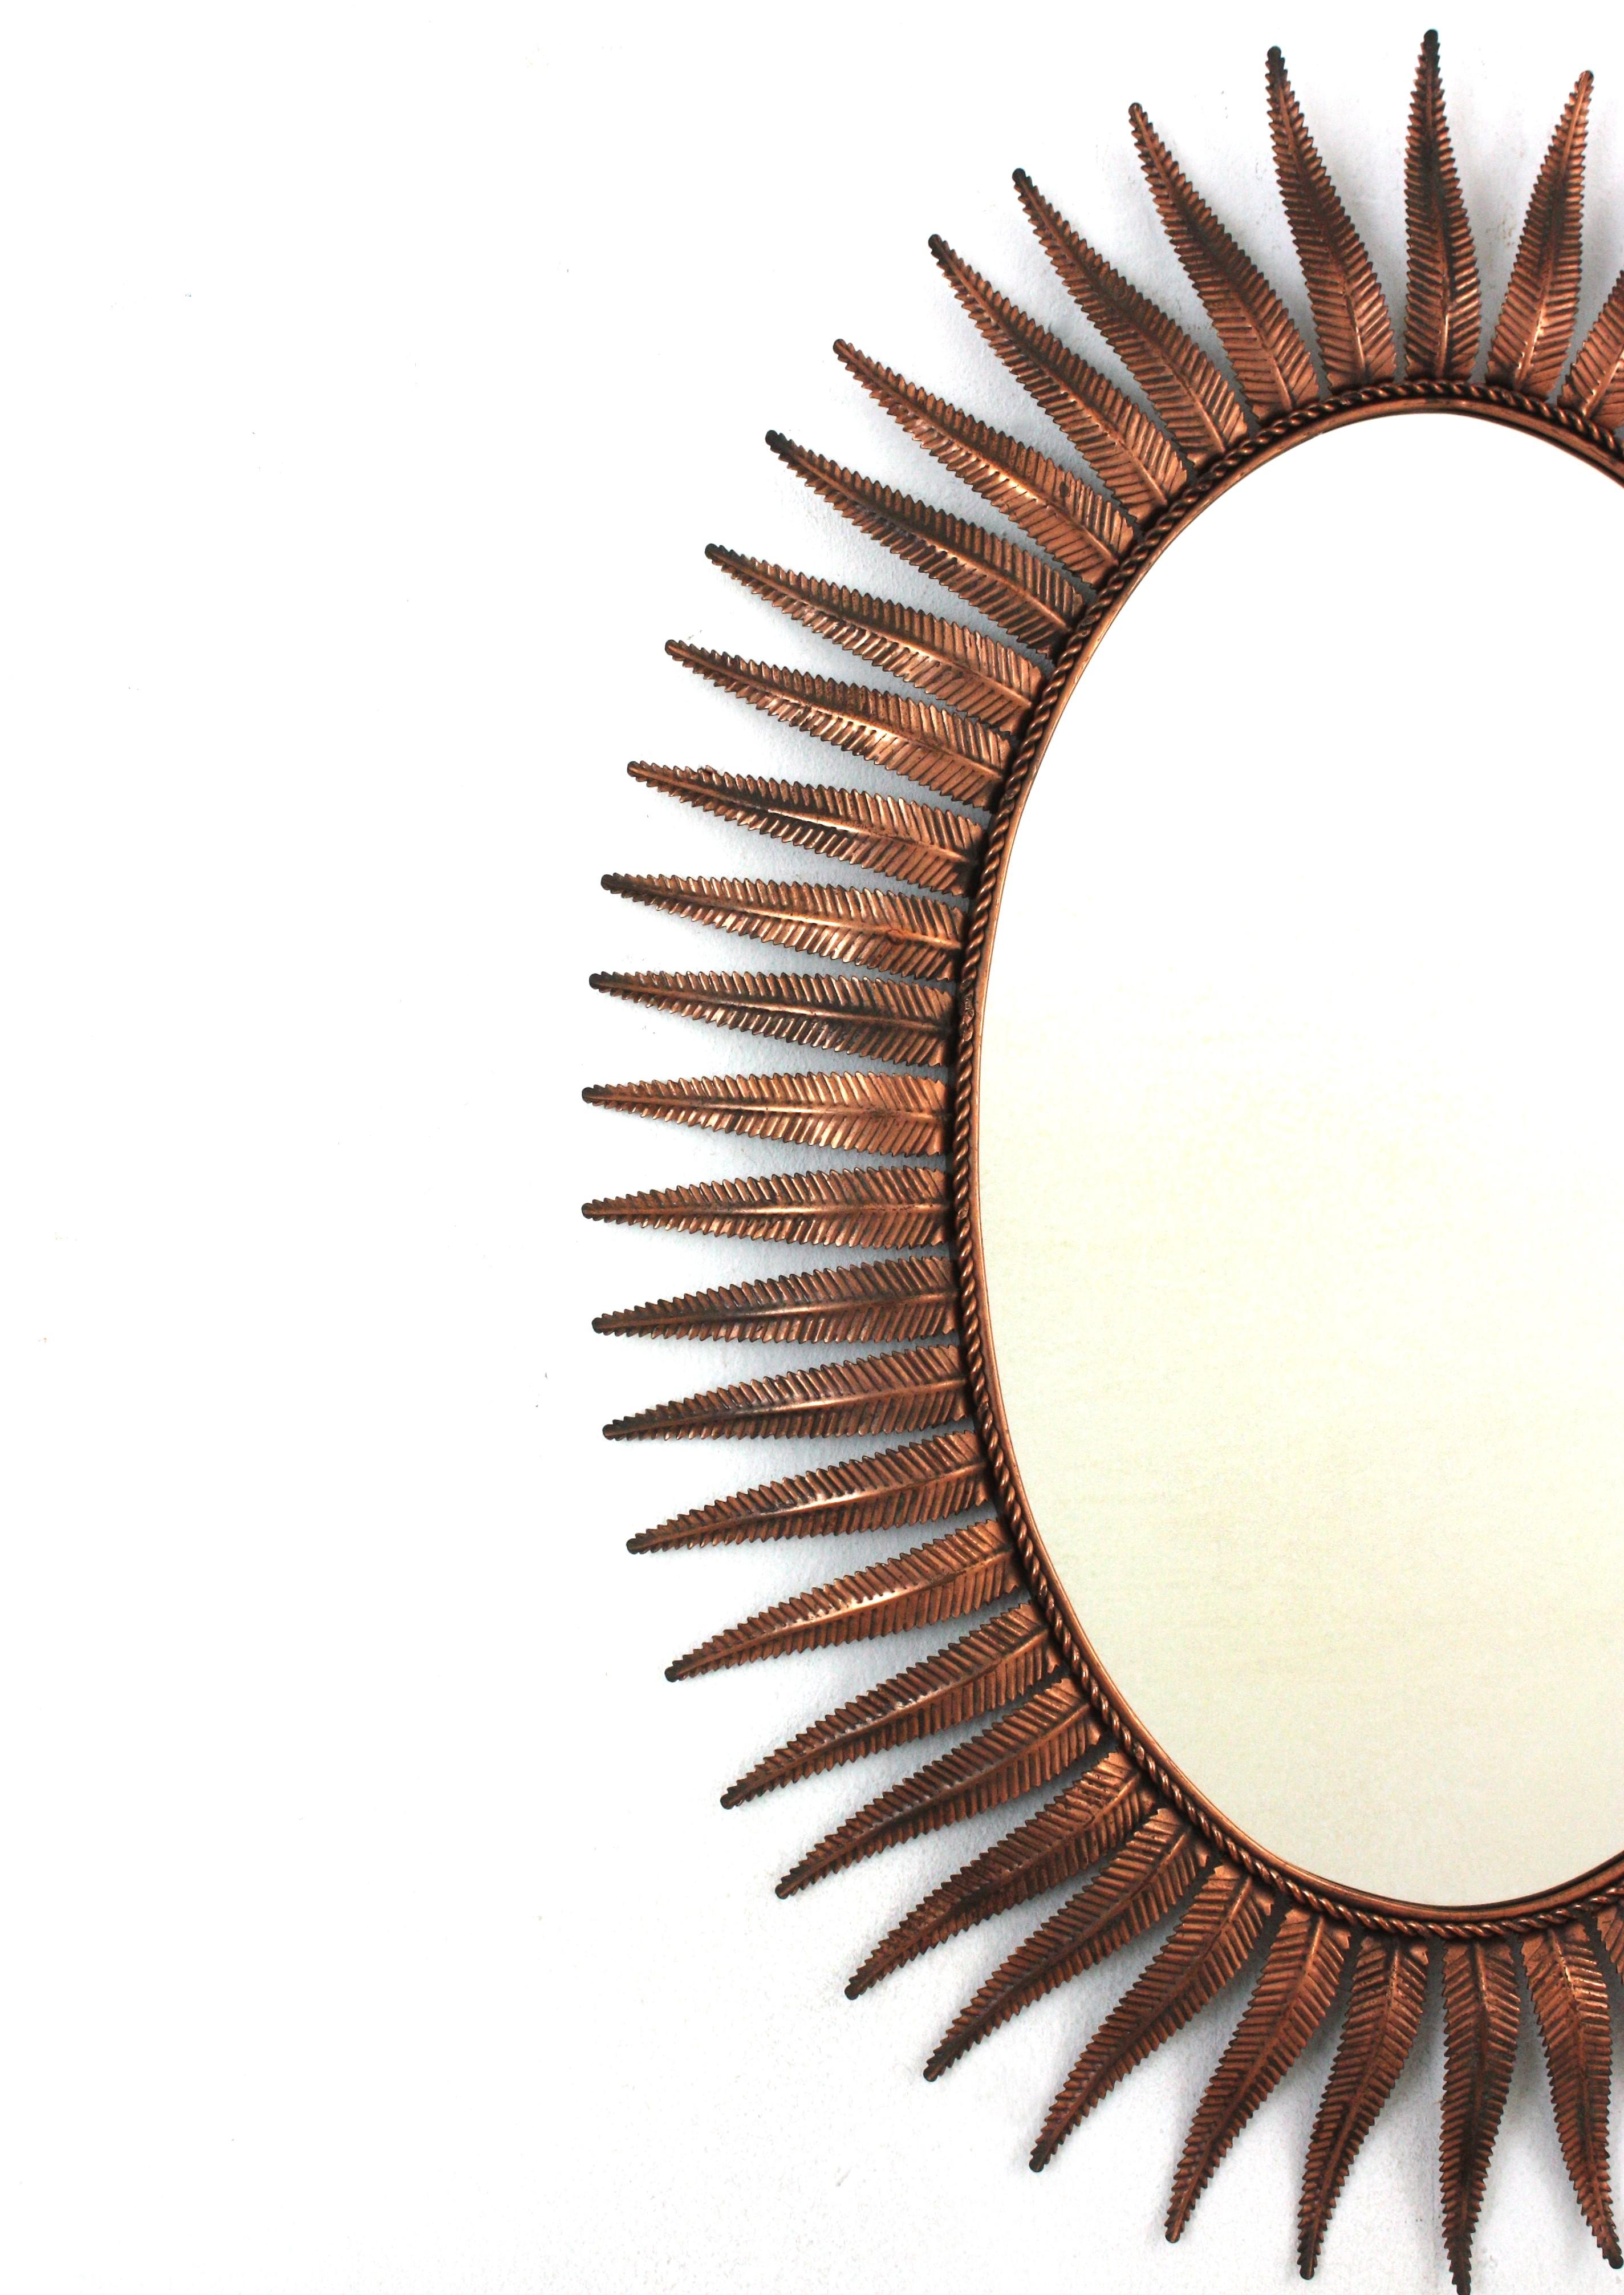 Spanish Sunburst Oval Mirror in Copper Metal, 1950s In Good Condition For Sale In Barcelona, ES